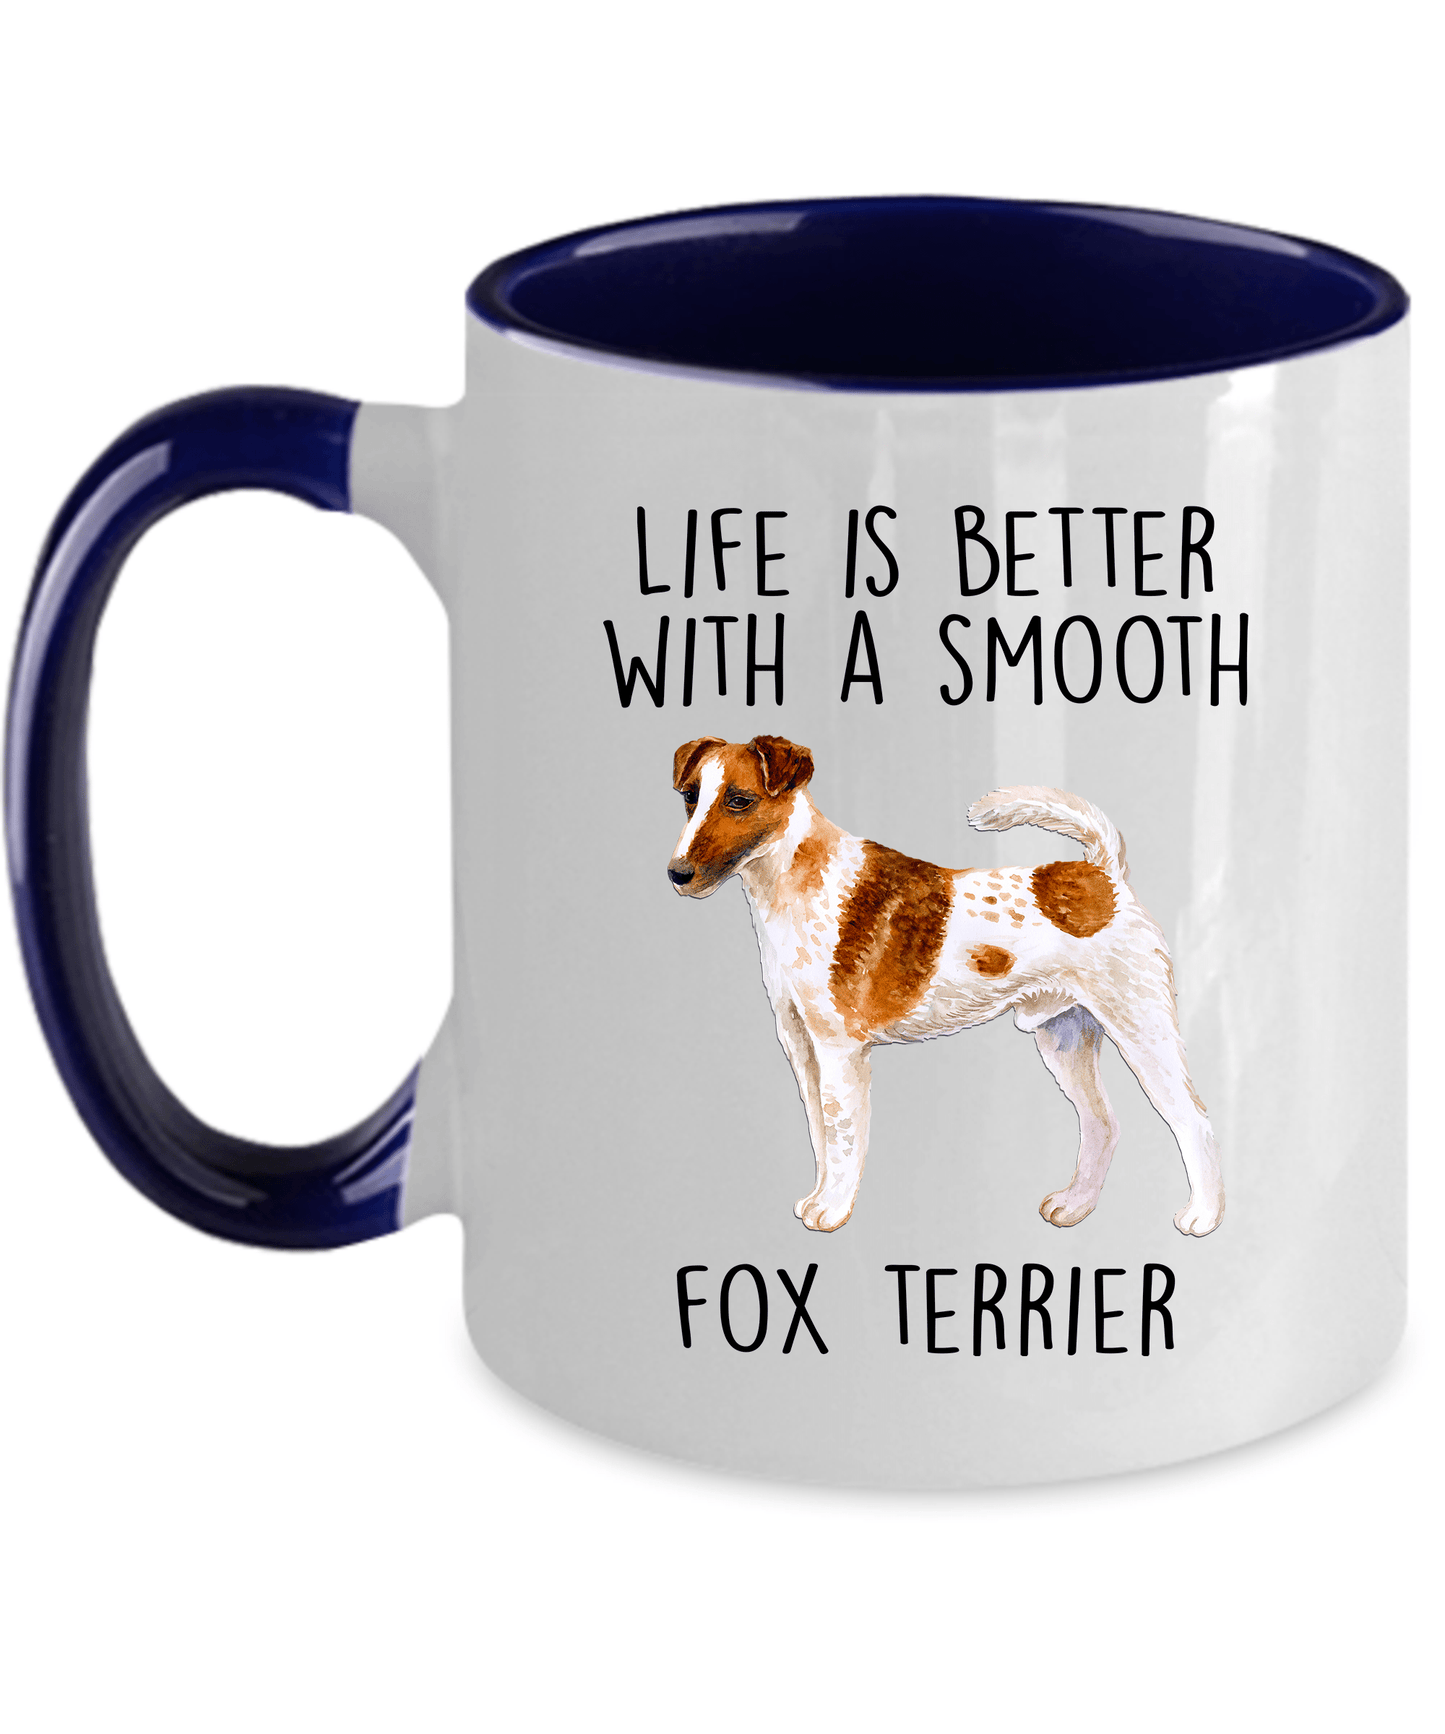 Best Ever Smooth Fox Terrier Dog Mom Ceramic Coffee Mug